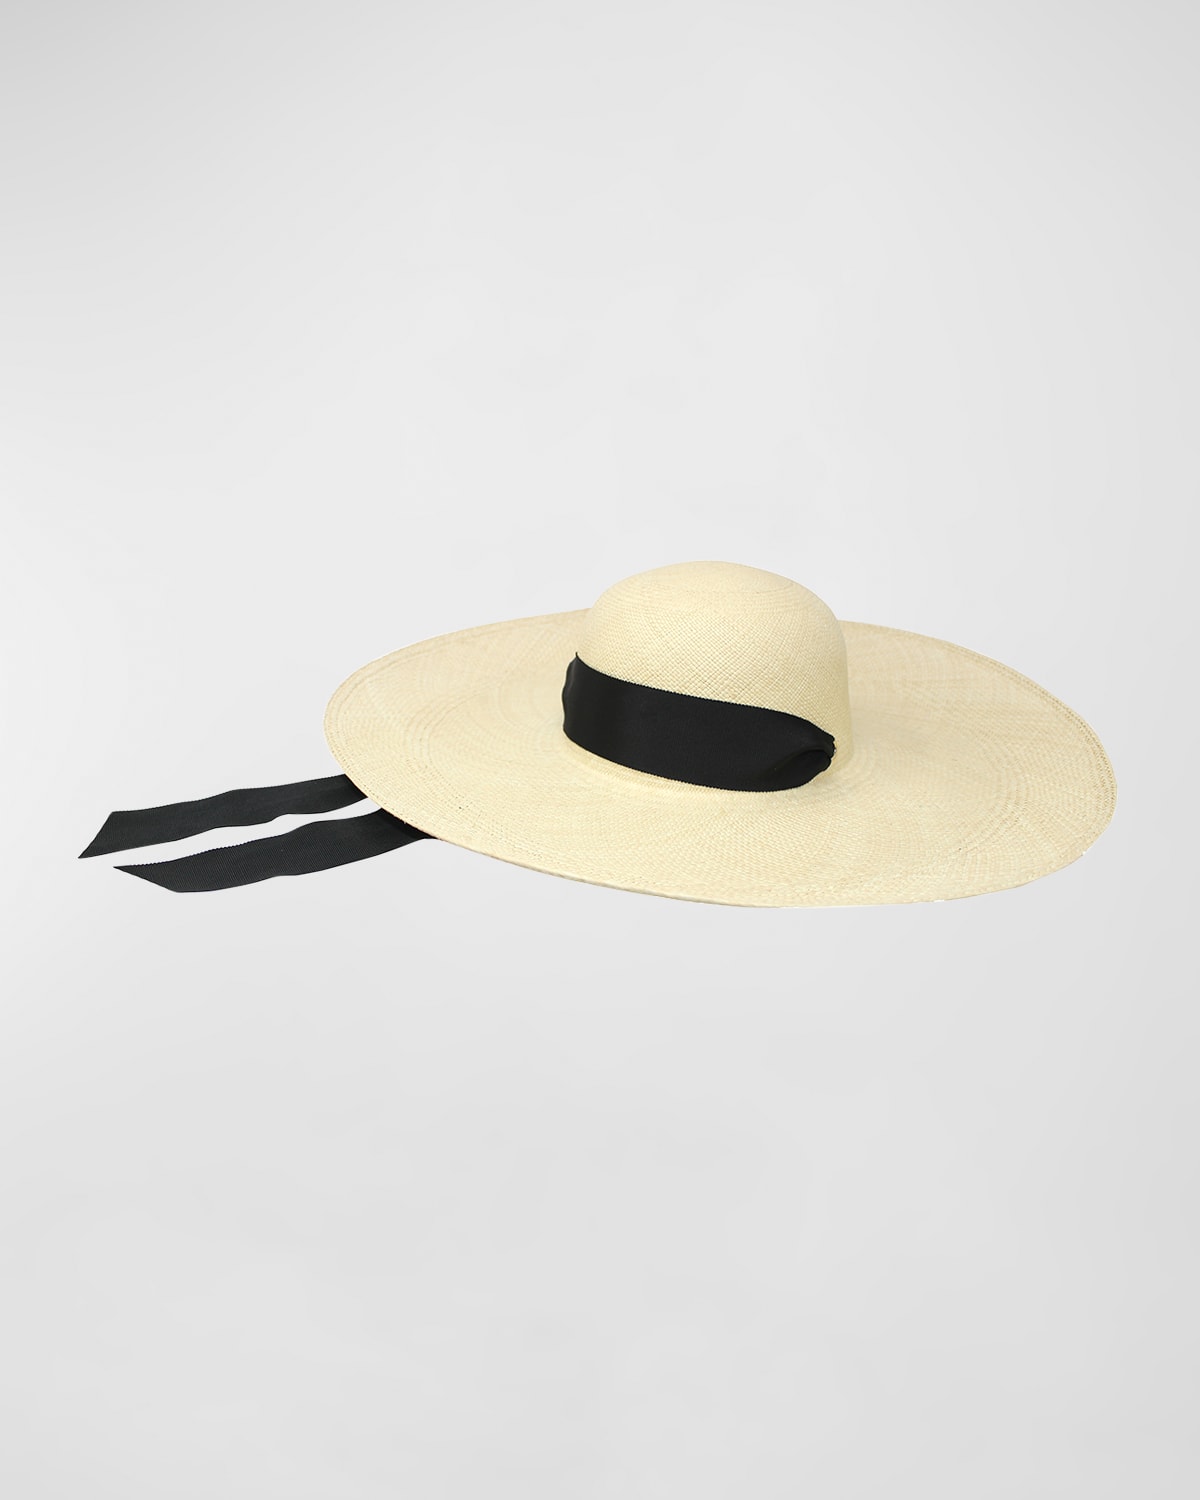 Sensi Studio Lady Ibiza Large-Brim Beach Hat